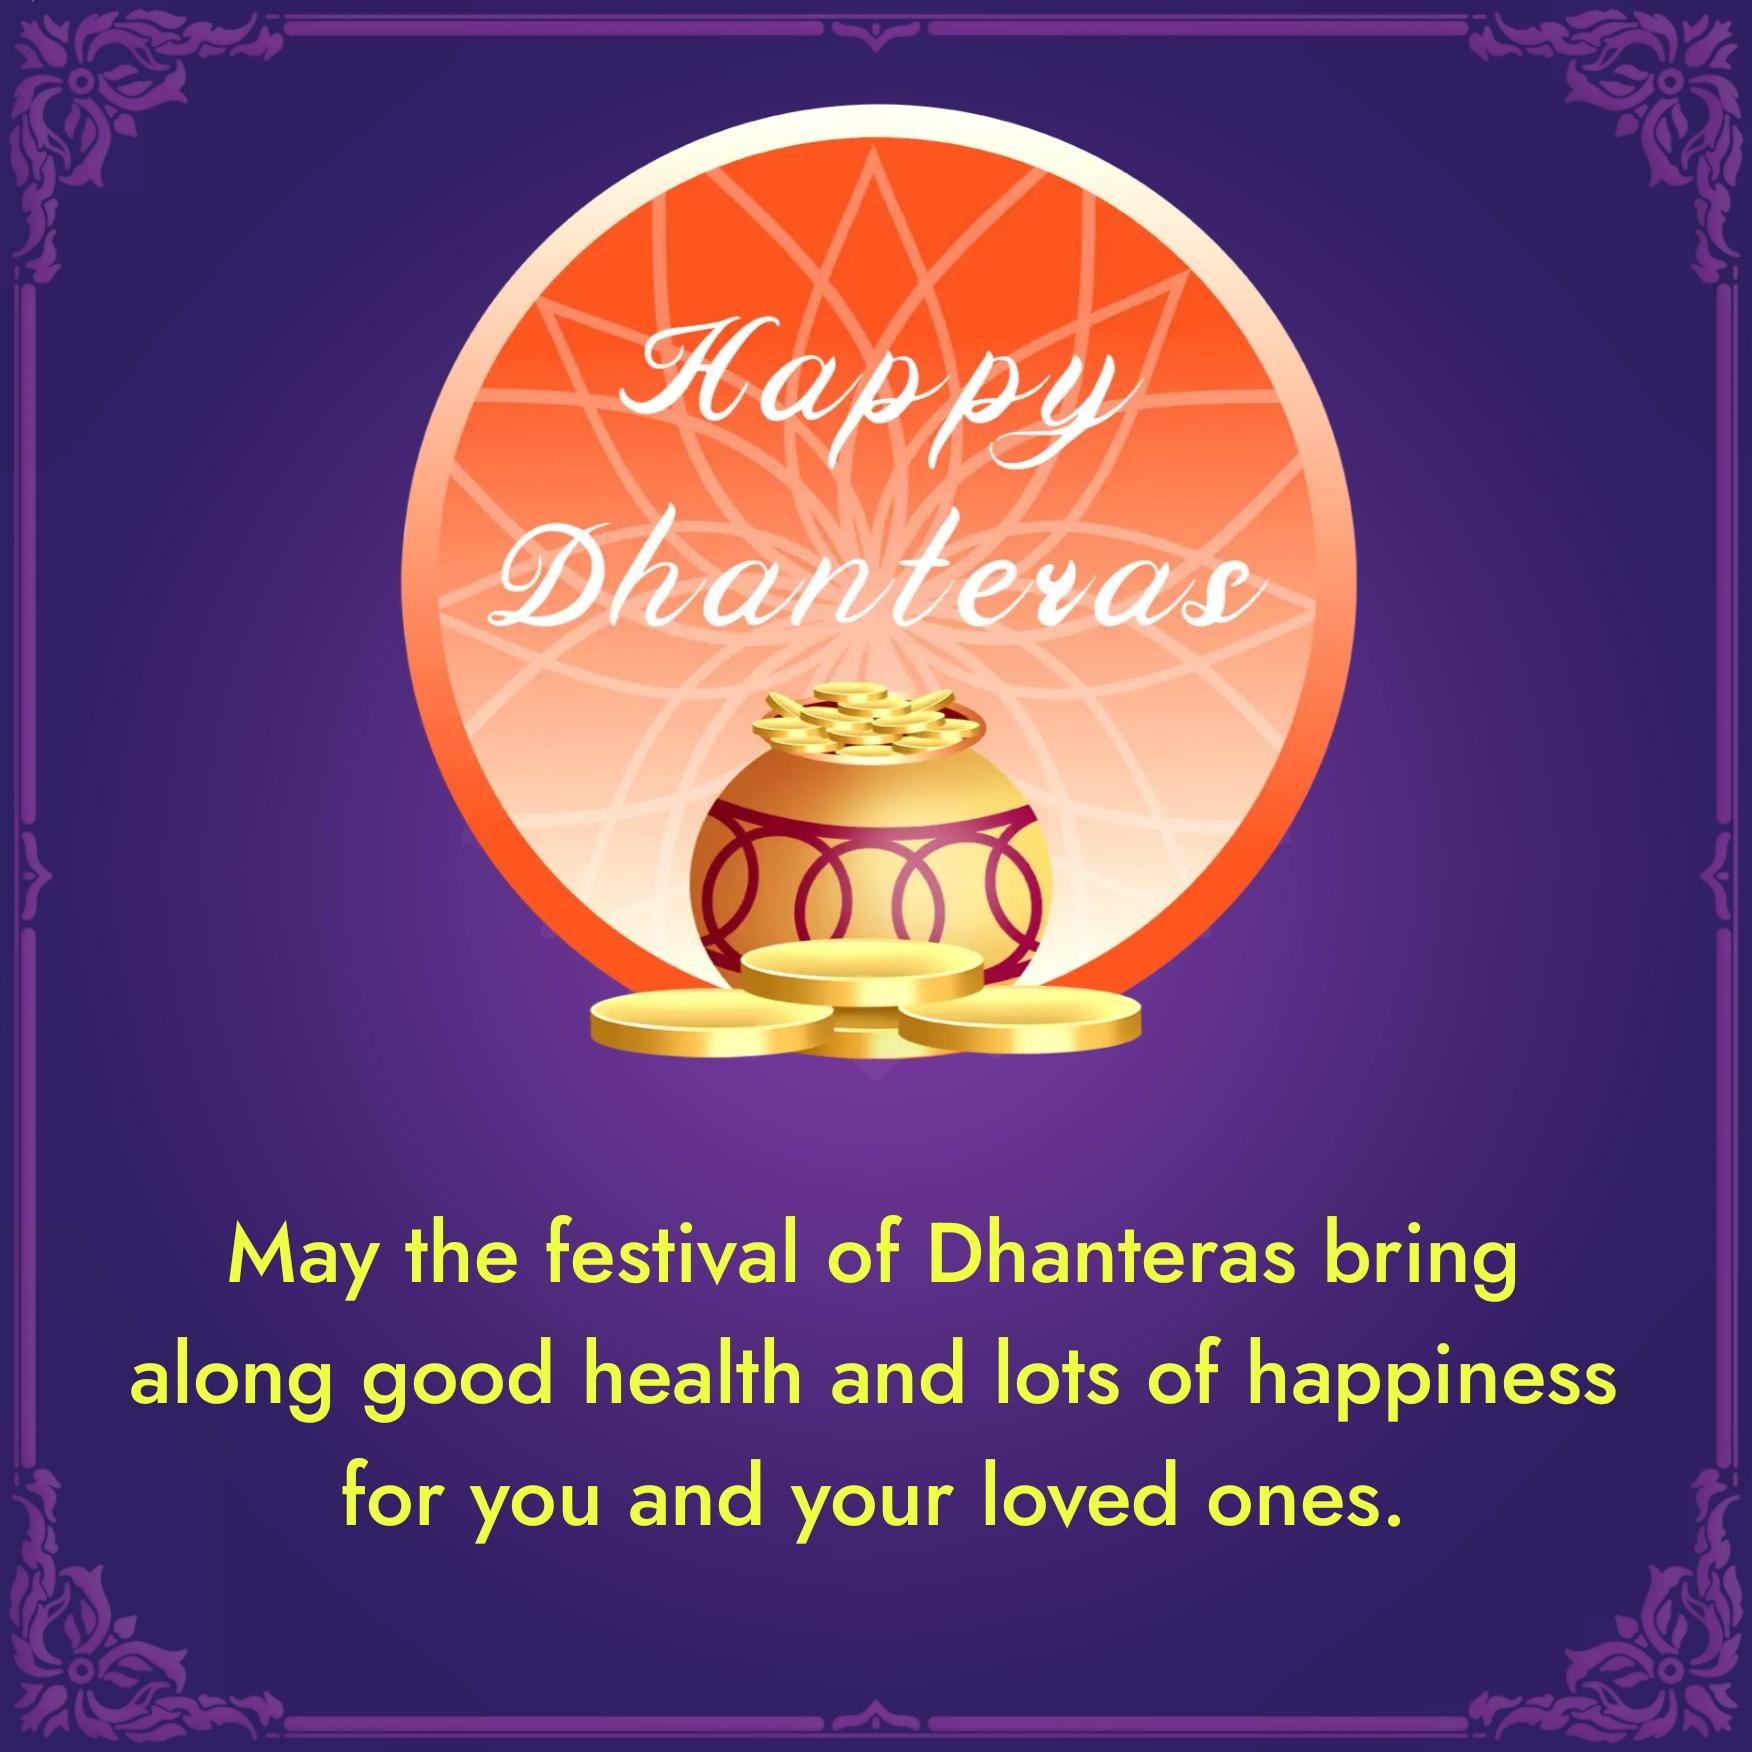 May the festival of Dhanteras bring along good health